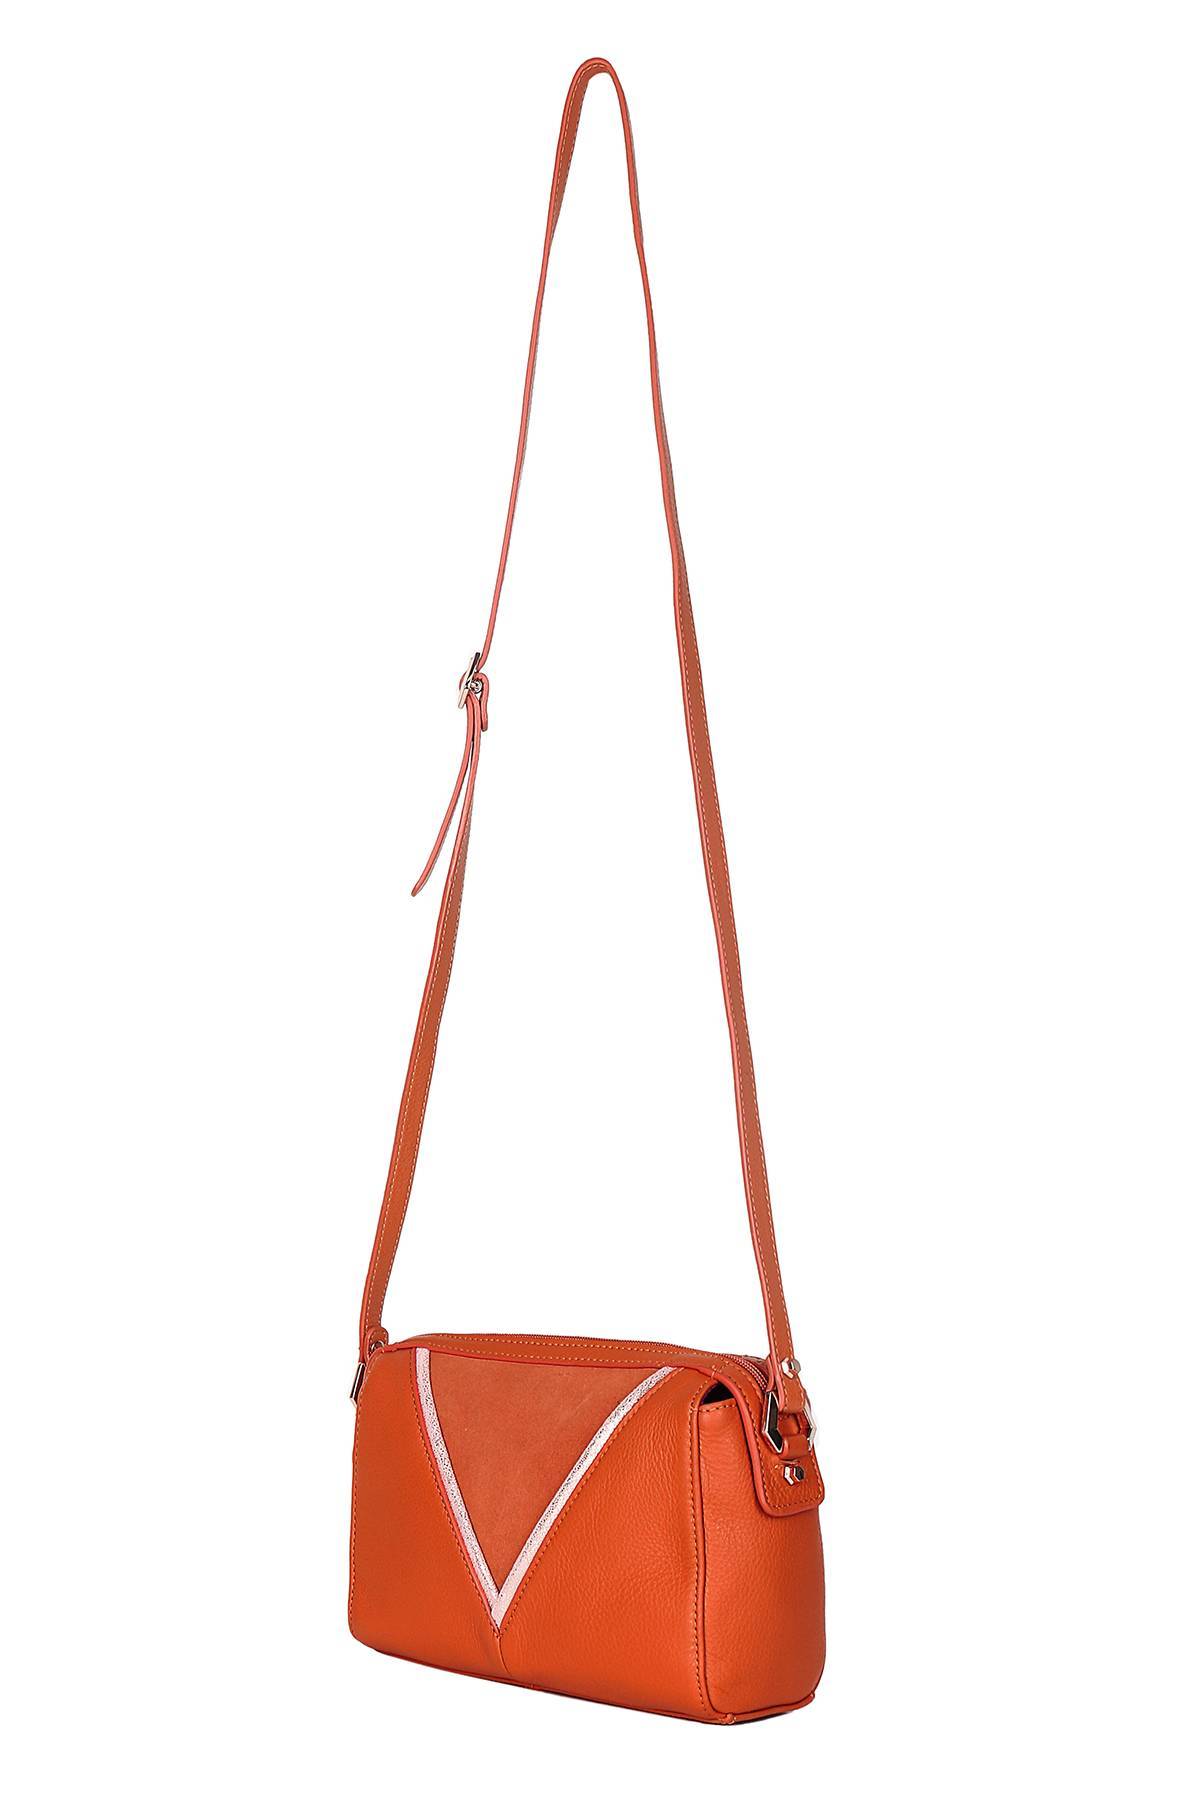 Cherry Paris - Elisabeth crossbody bag orange